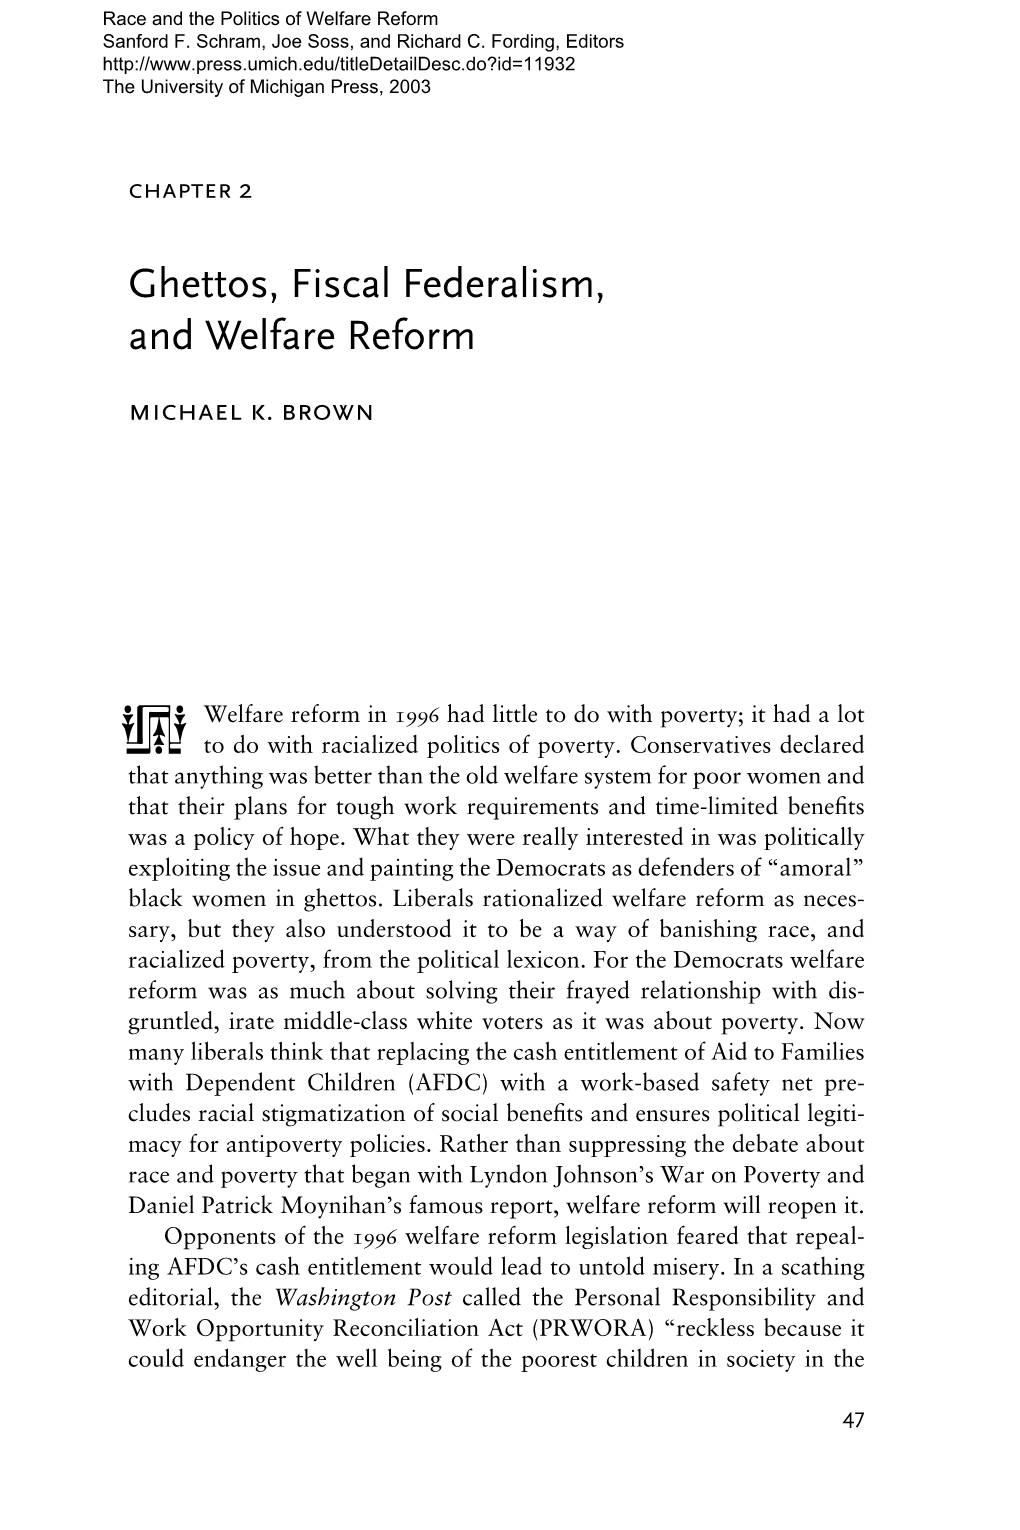 Ghettos, Fiscal Federalism, and Welfare Reform Michael K